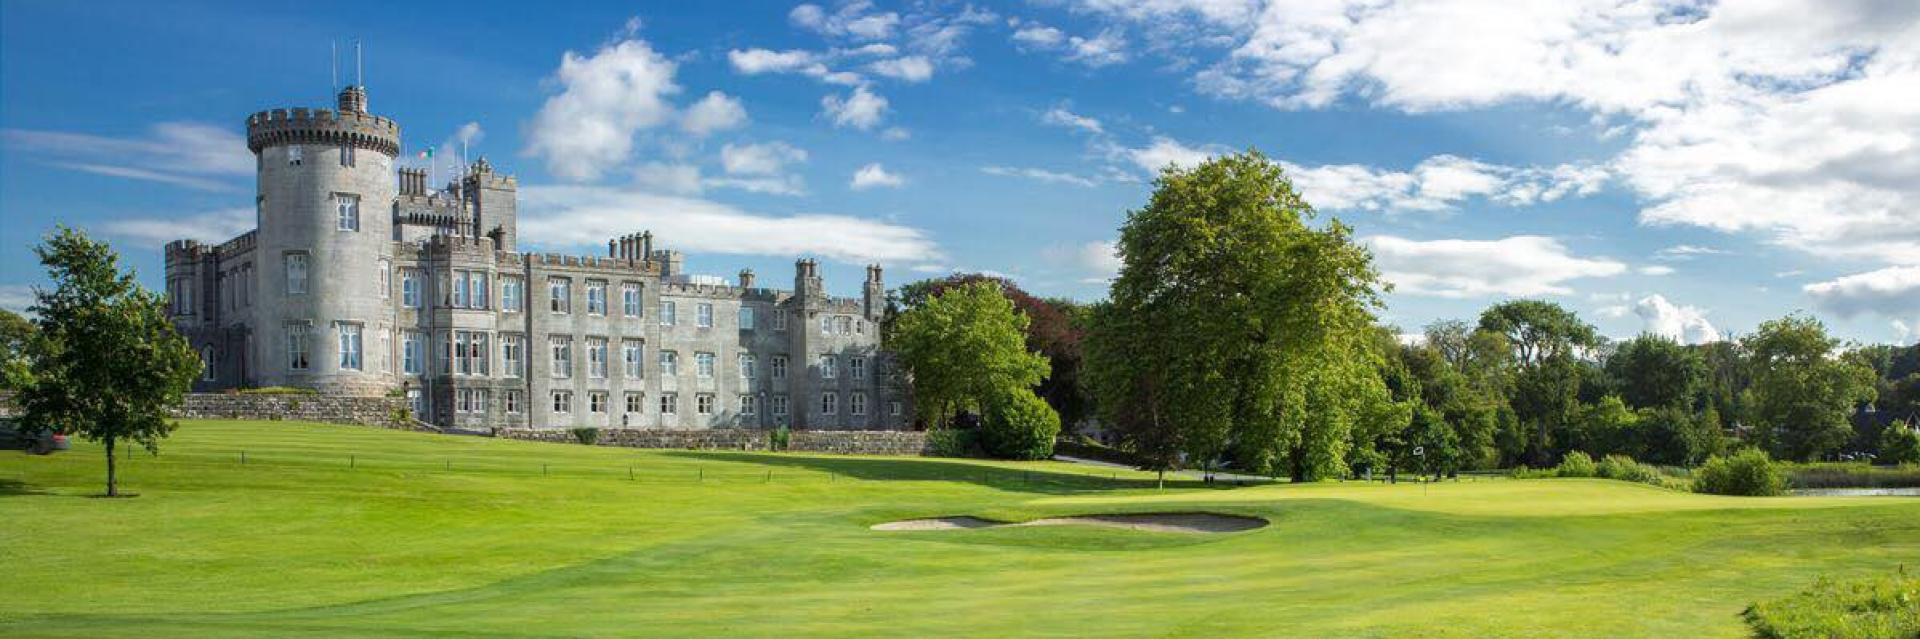 Dromoland Castle Hotel Golf Course